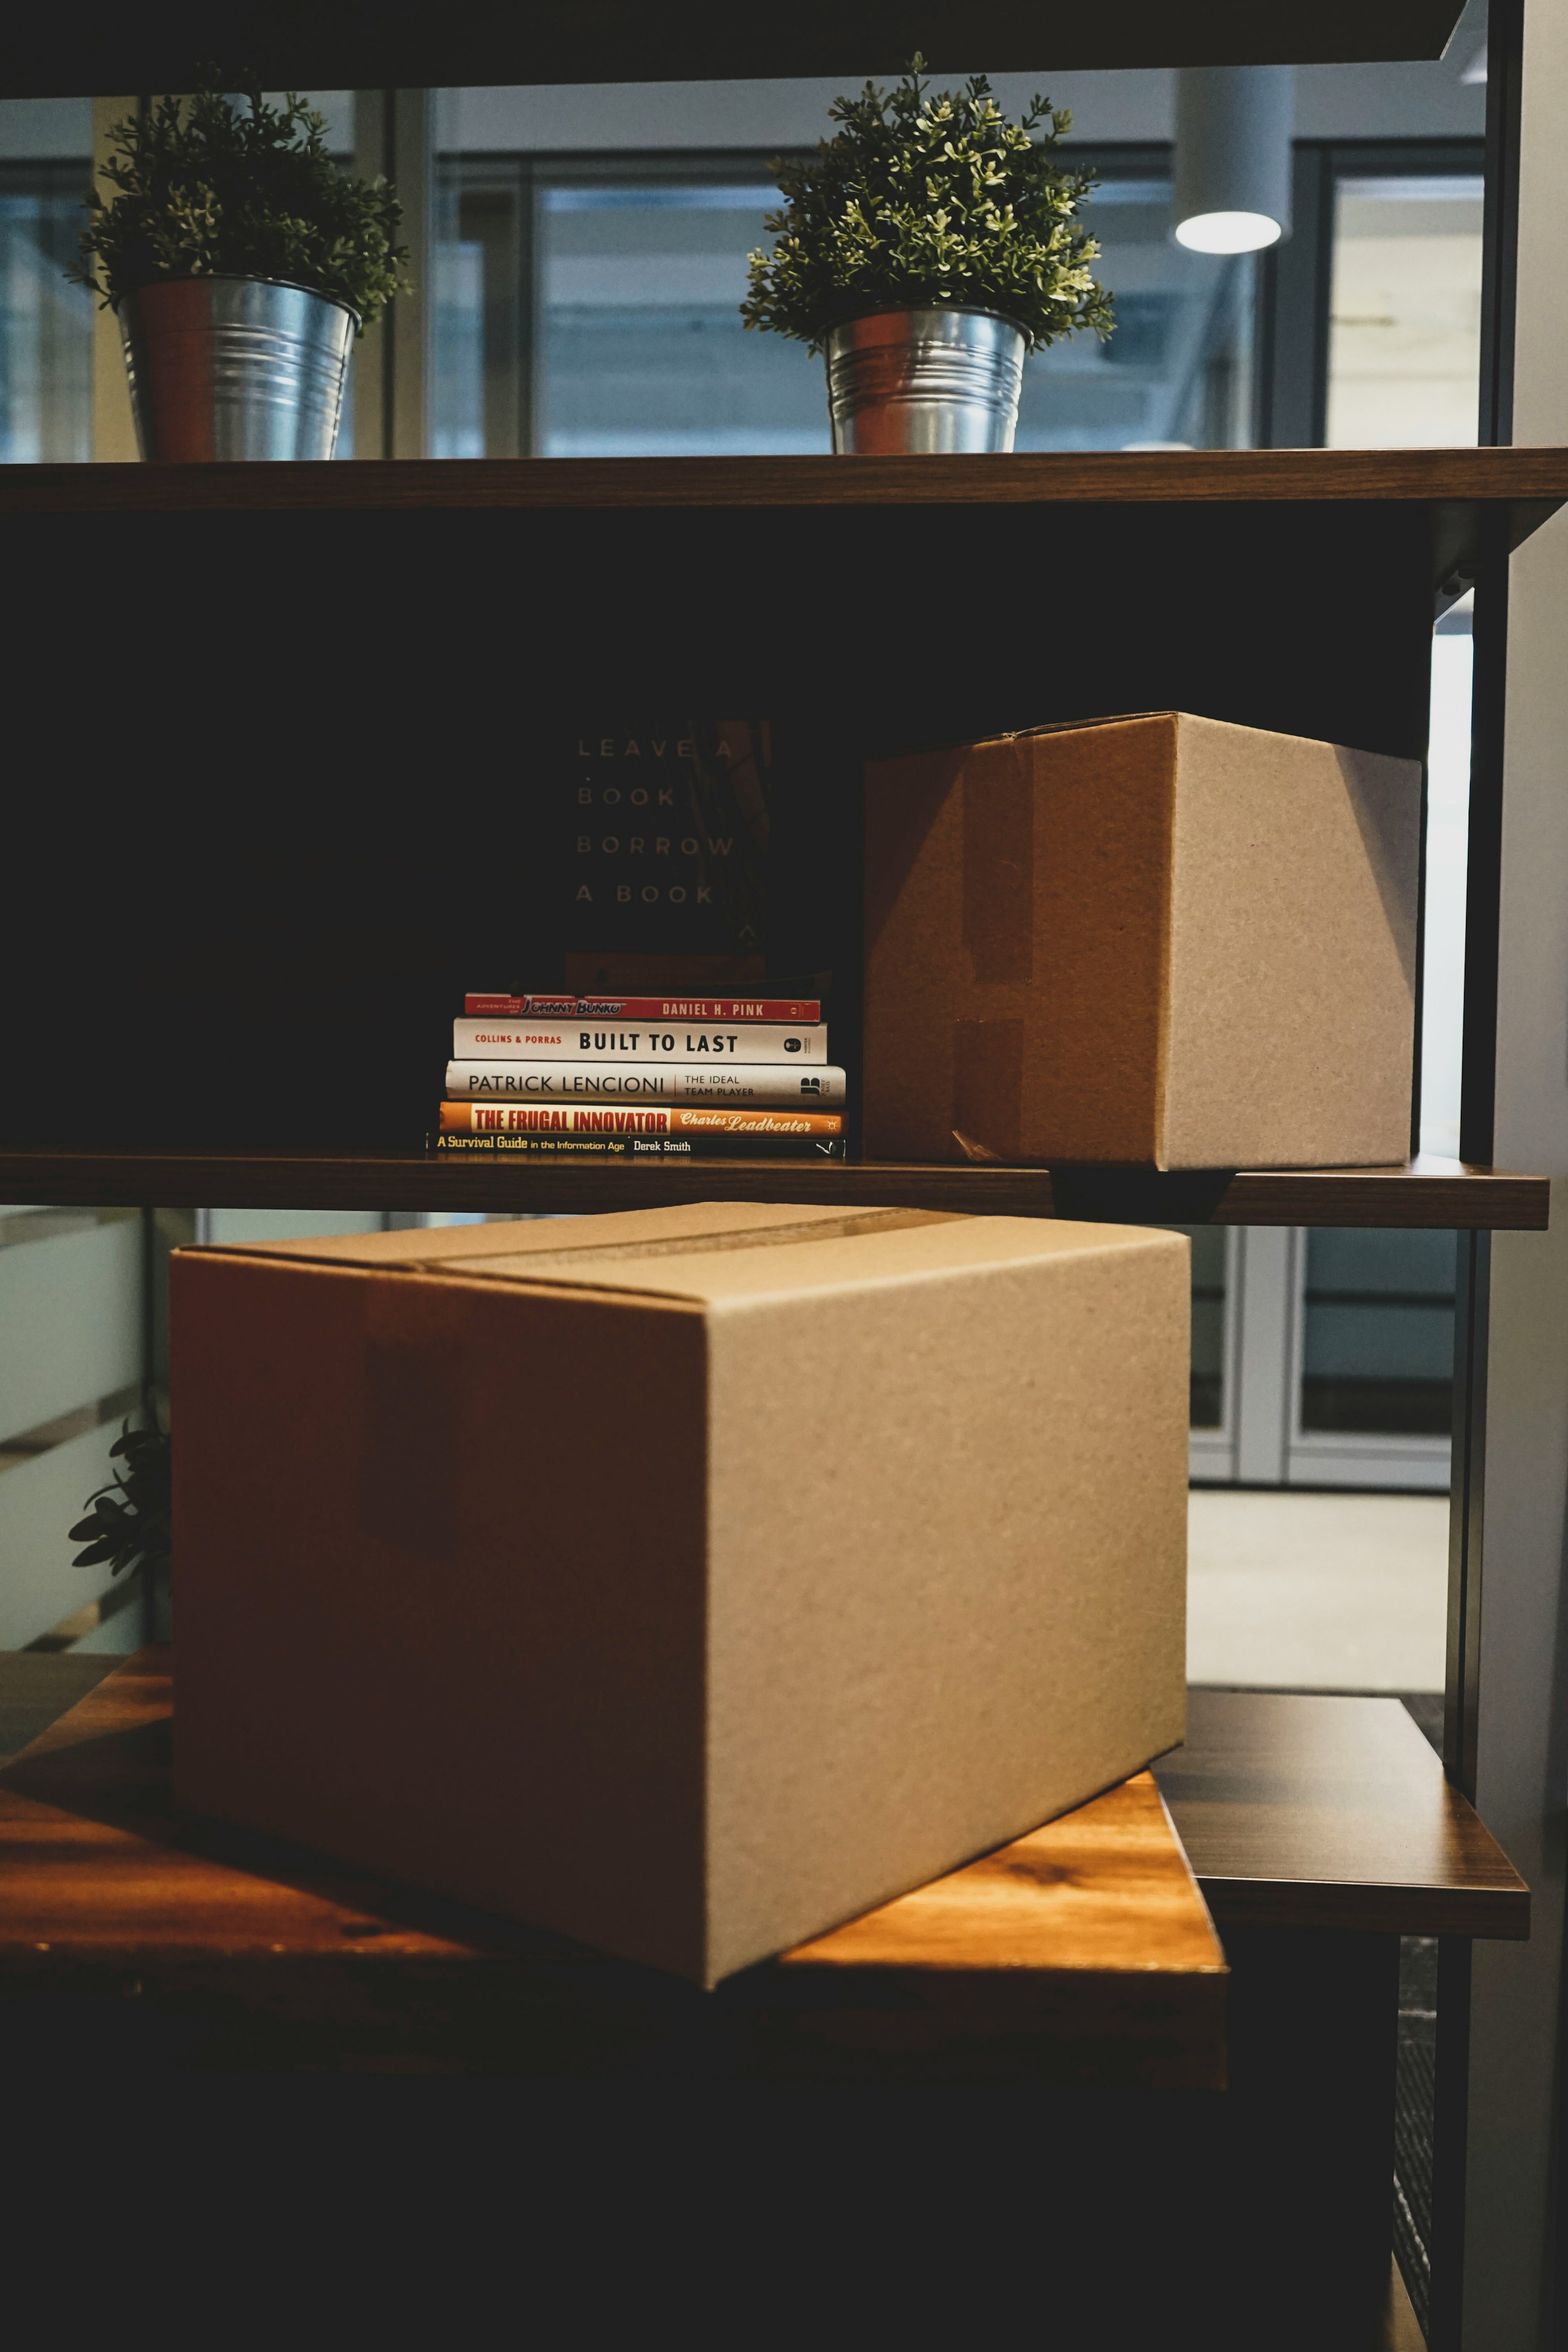 A cardboard box and books | Source: Unsplash